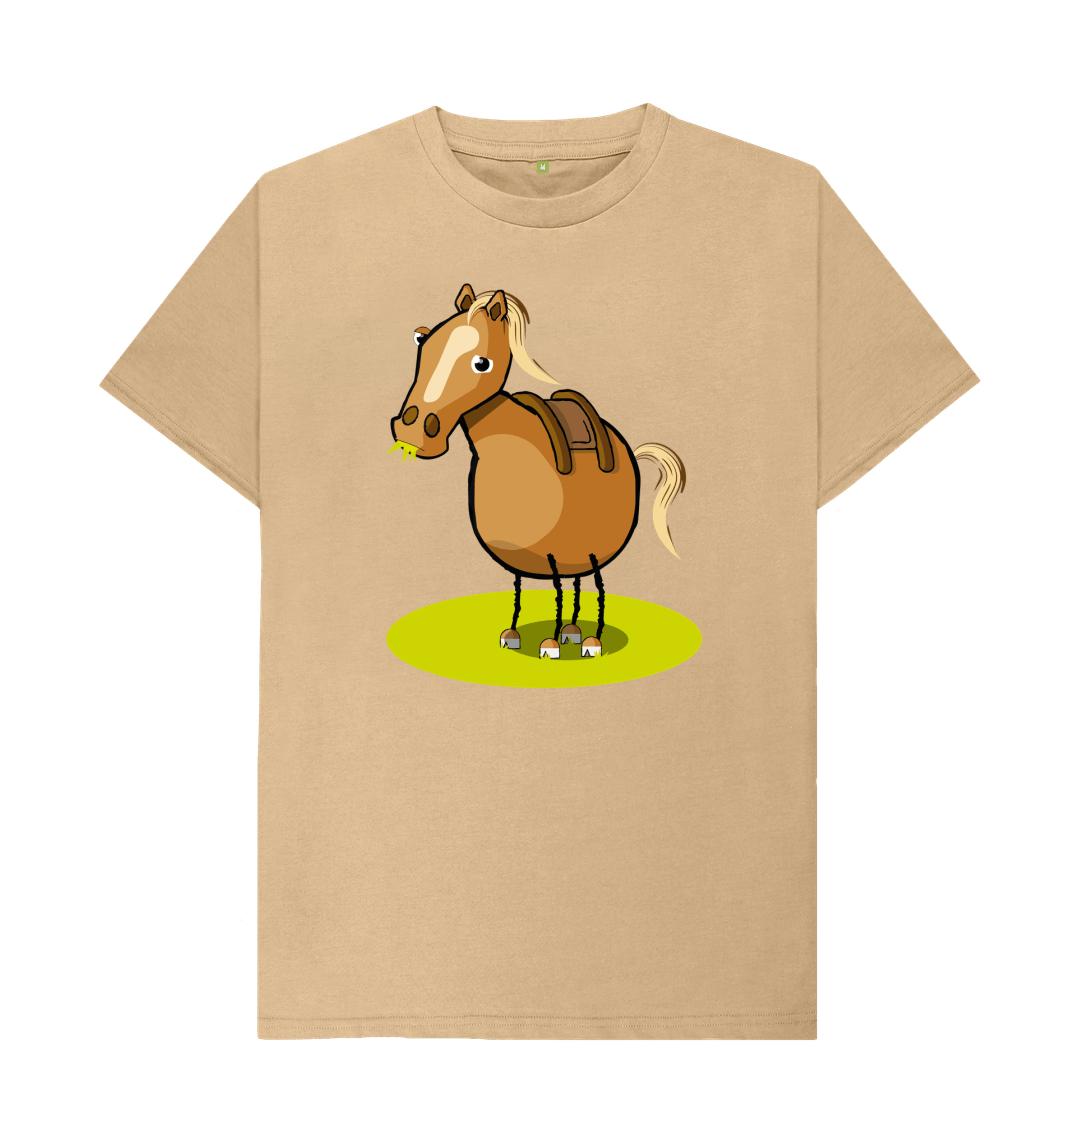 Sand Organic Cotton Men's Mental Health T-Shirt Funny Grumpy Horse